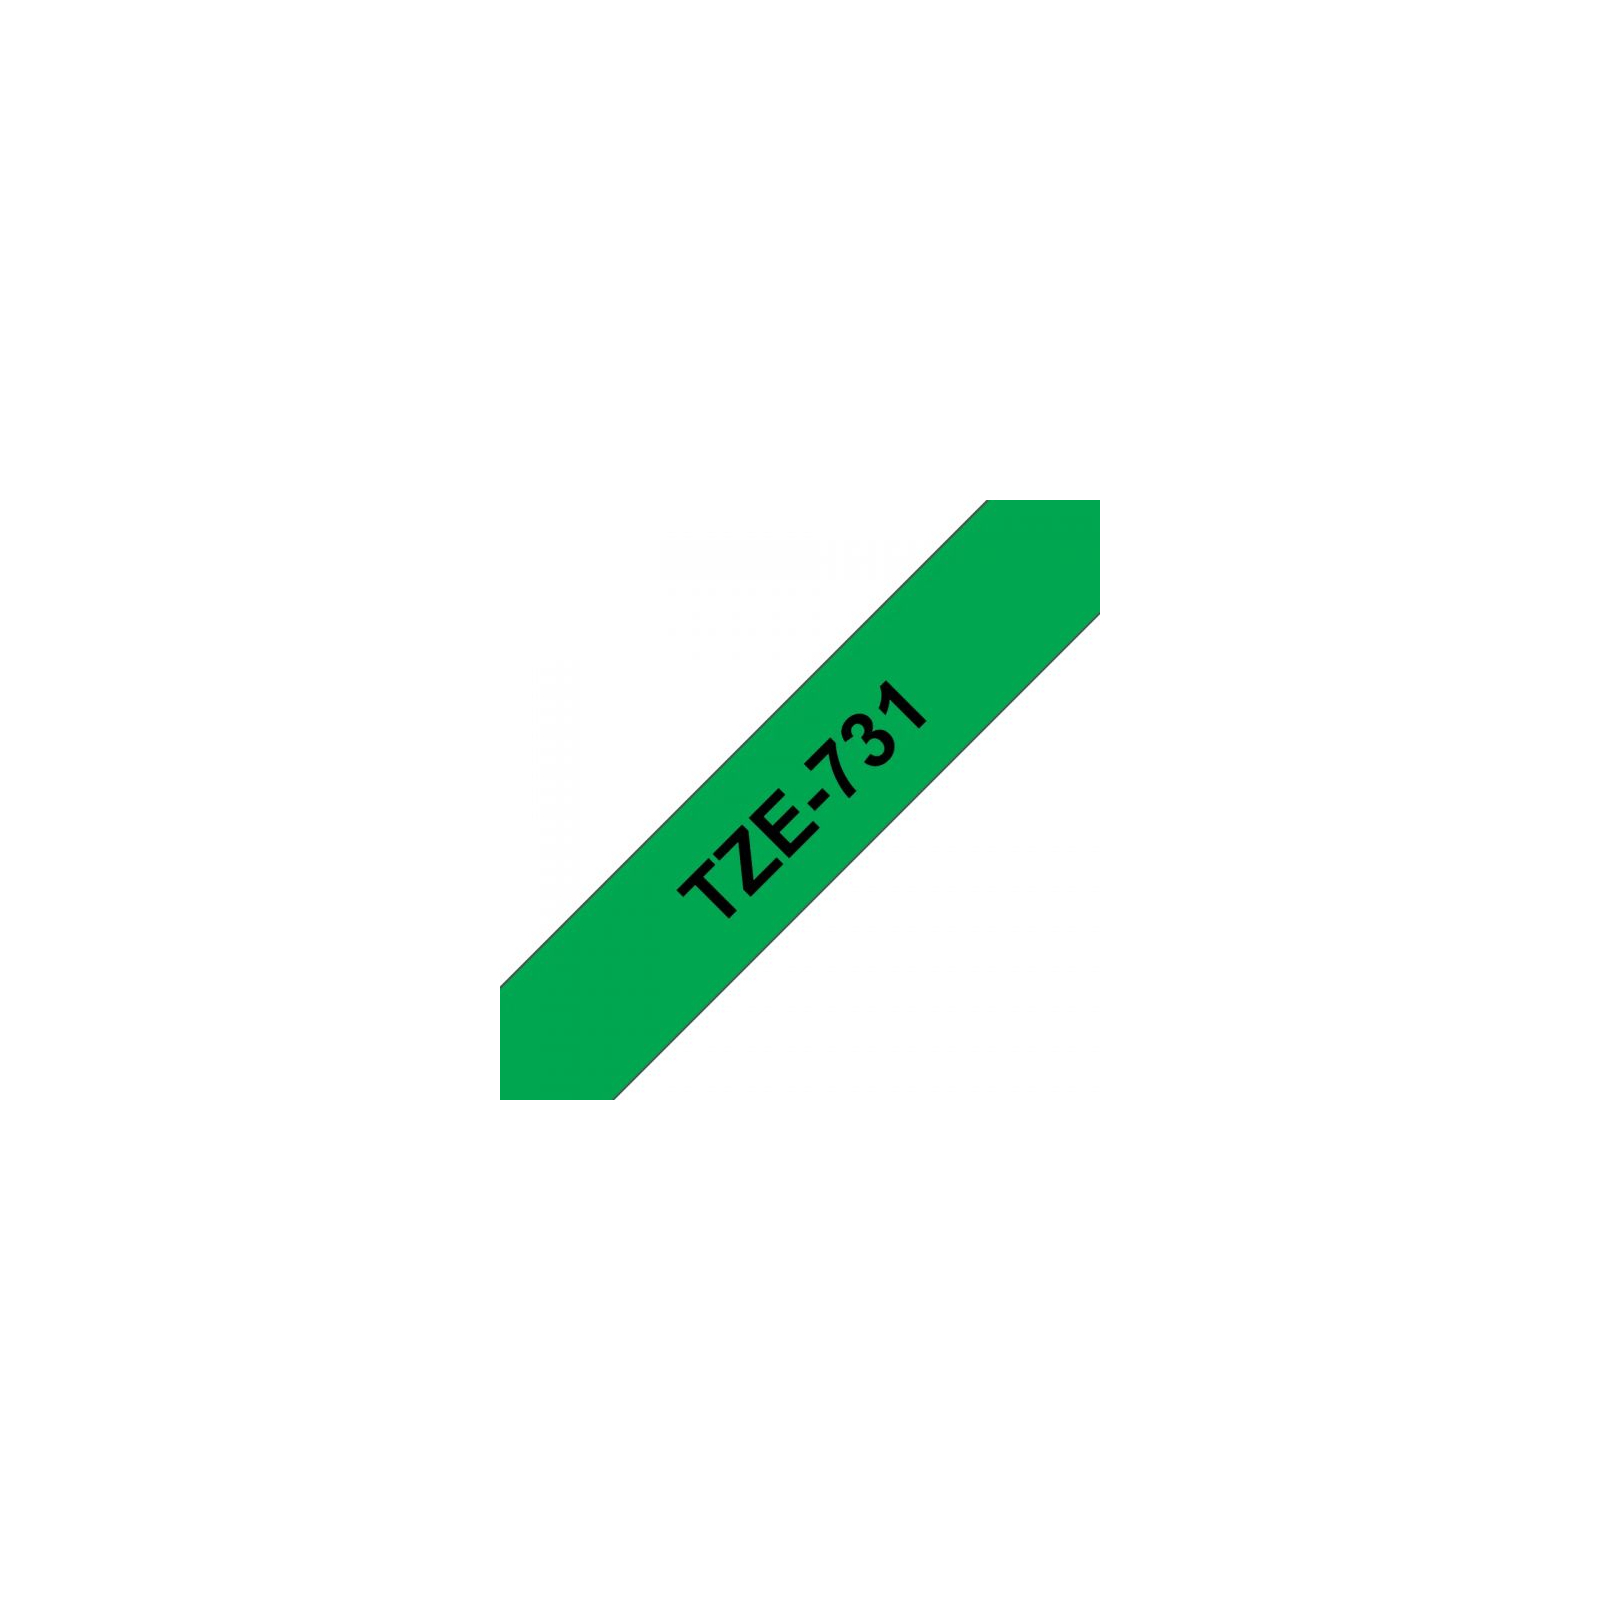 Лента для принтера этикеток UKRMARK B-T731P-BK/GR, совместима с TZE731. Размеры ленты: 12 мм х 8 м. black on зеленом (B-T731P-BK/GR) изображение 2